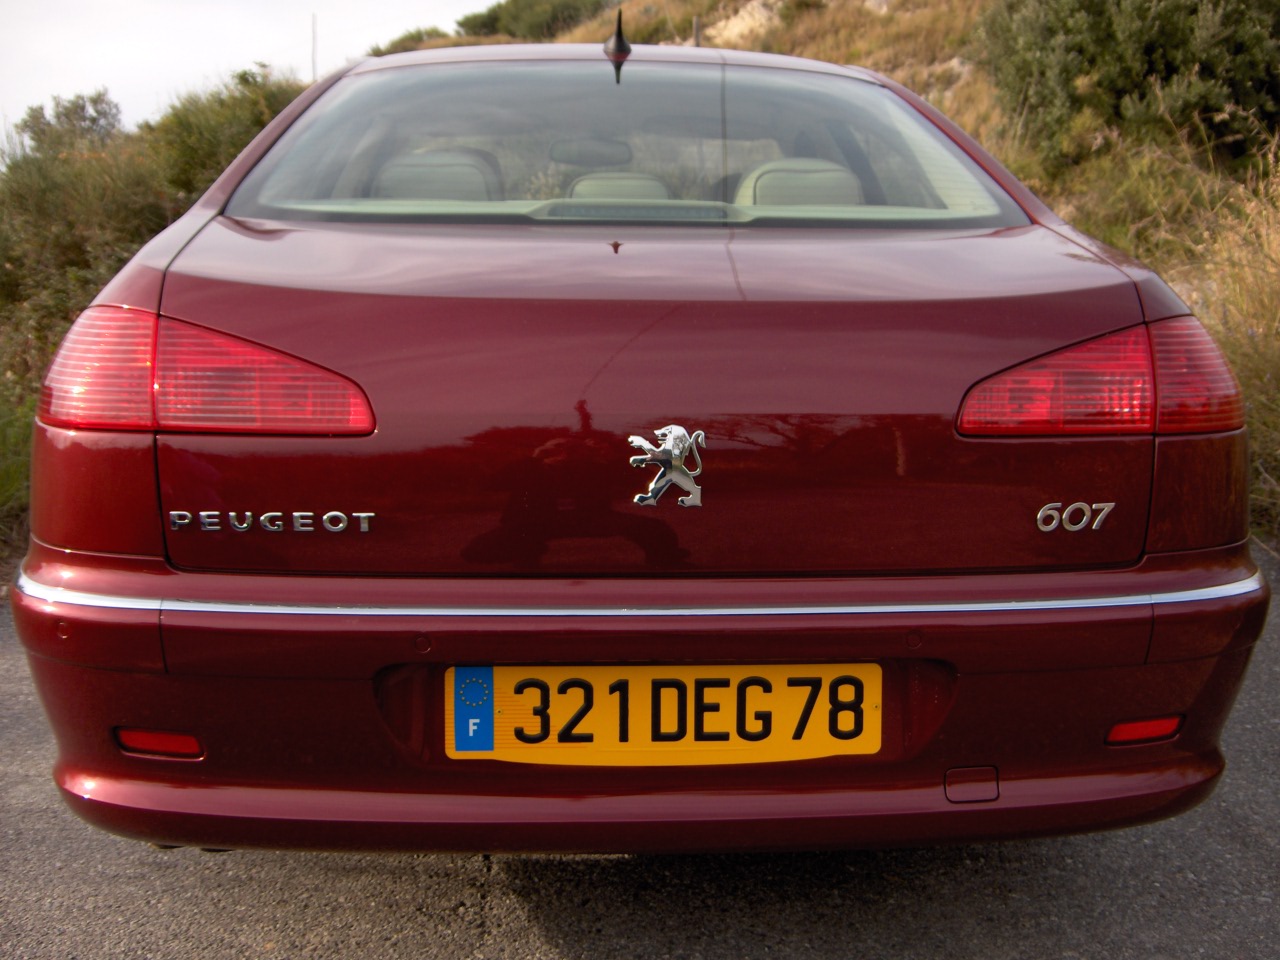  - Peugeot 607 V6 Hdi